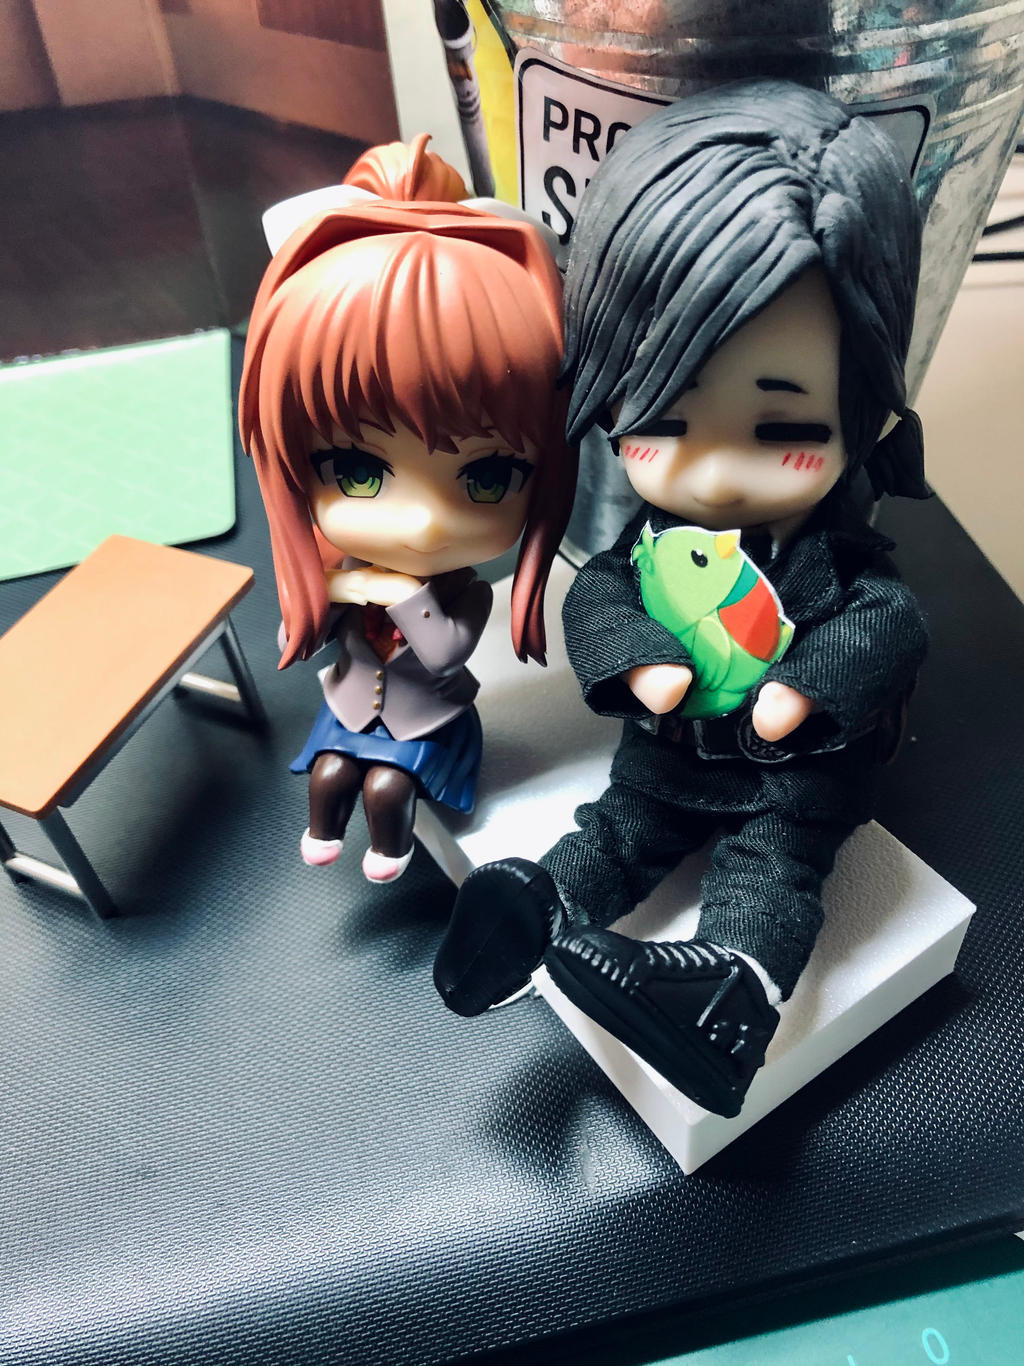 Sayori and Yuri Are Here With New Doki Doki Literature Club Nendoroids